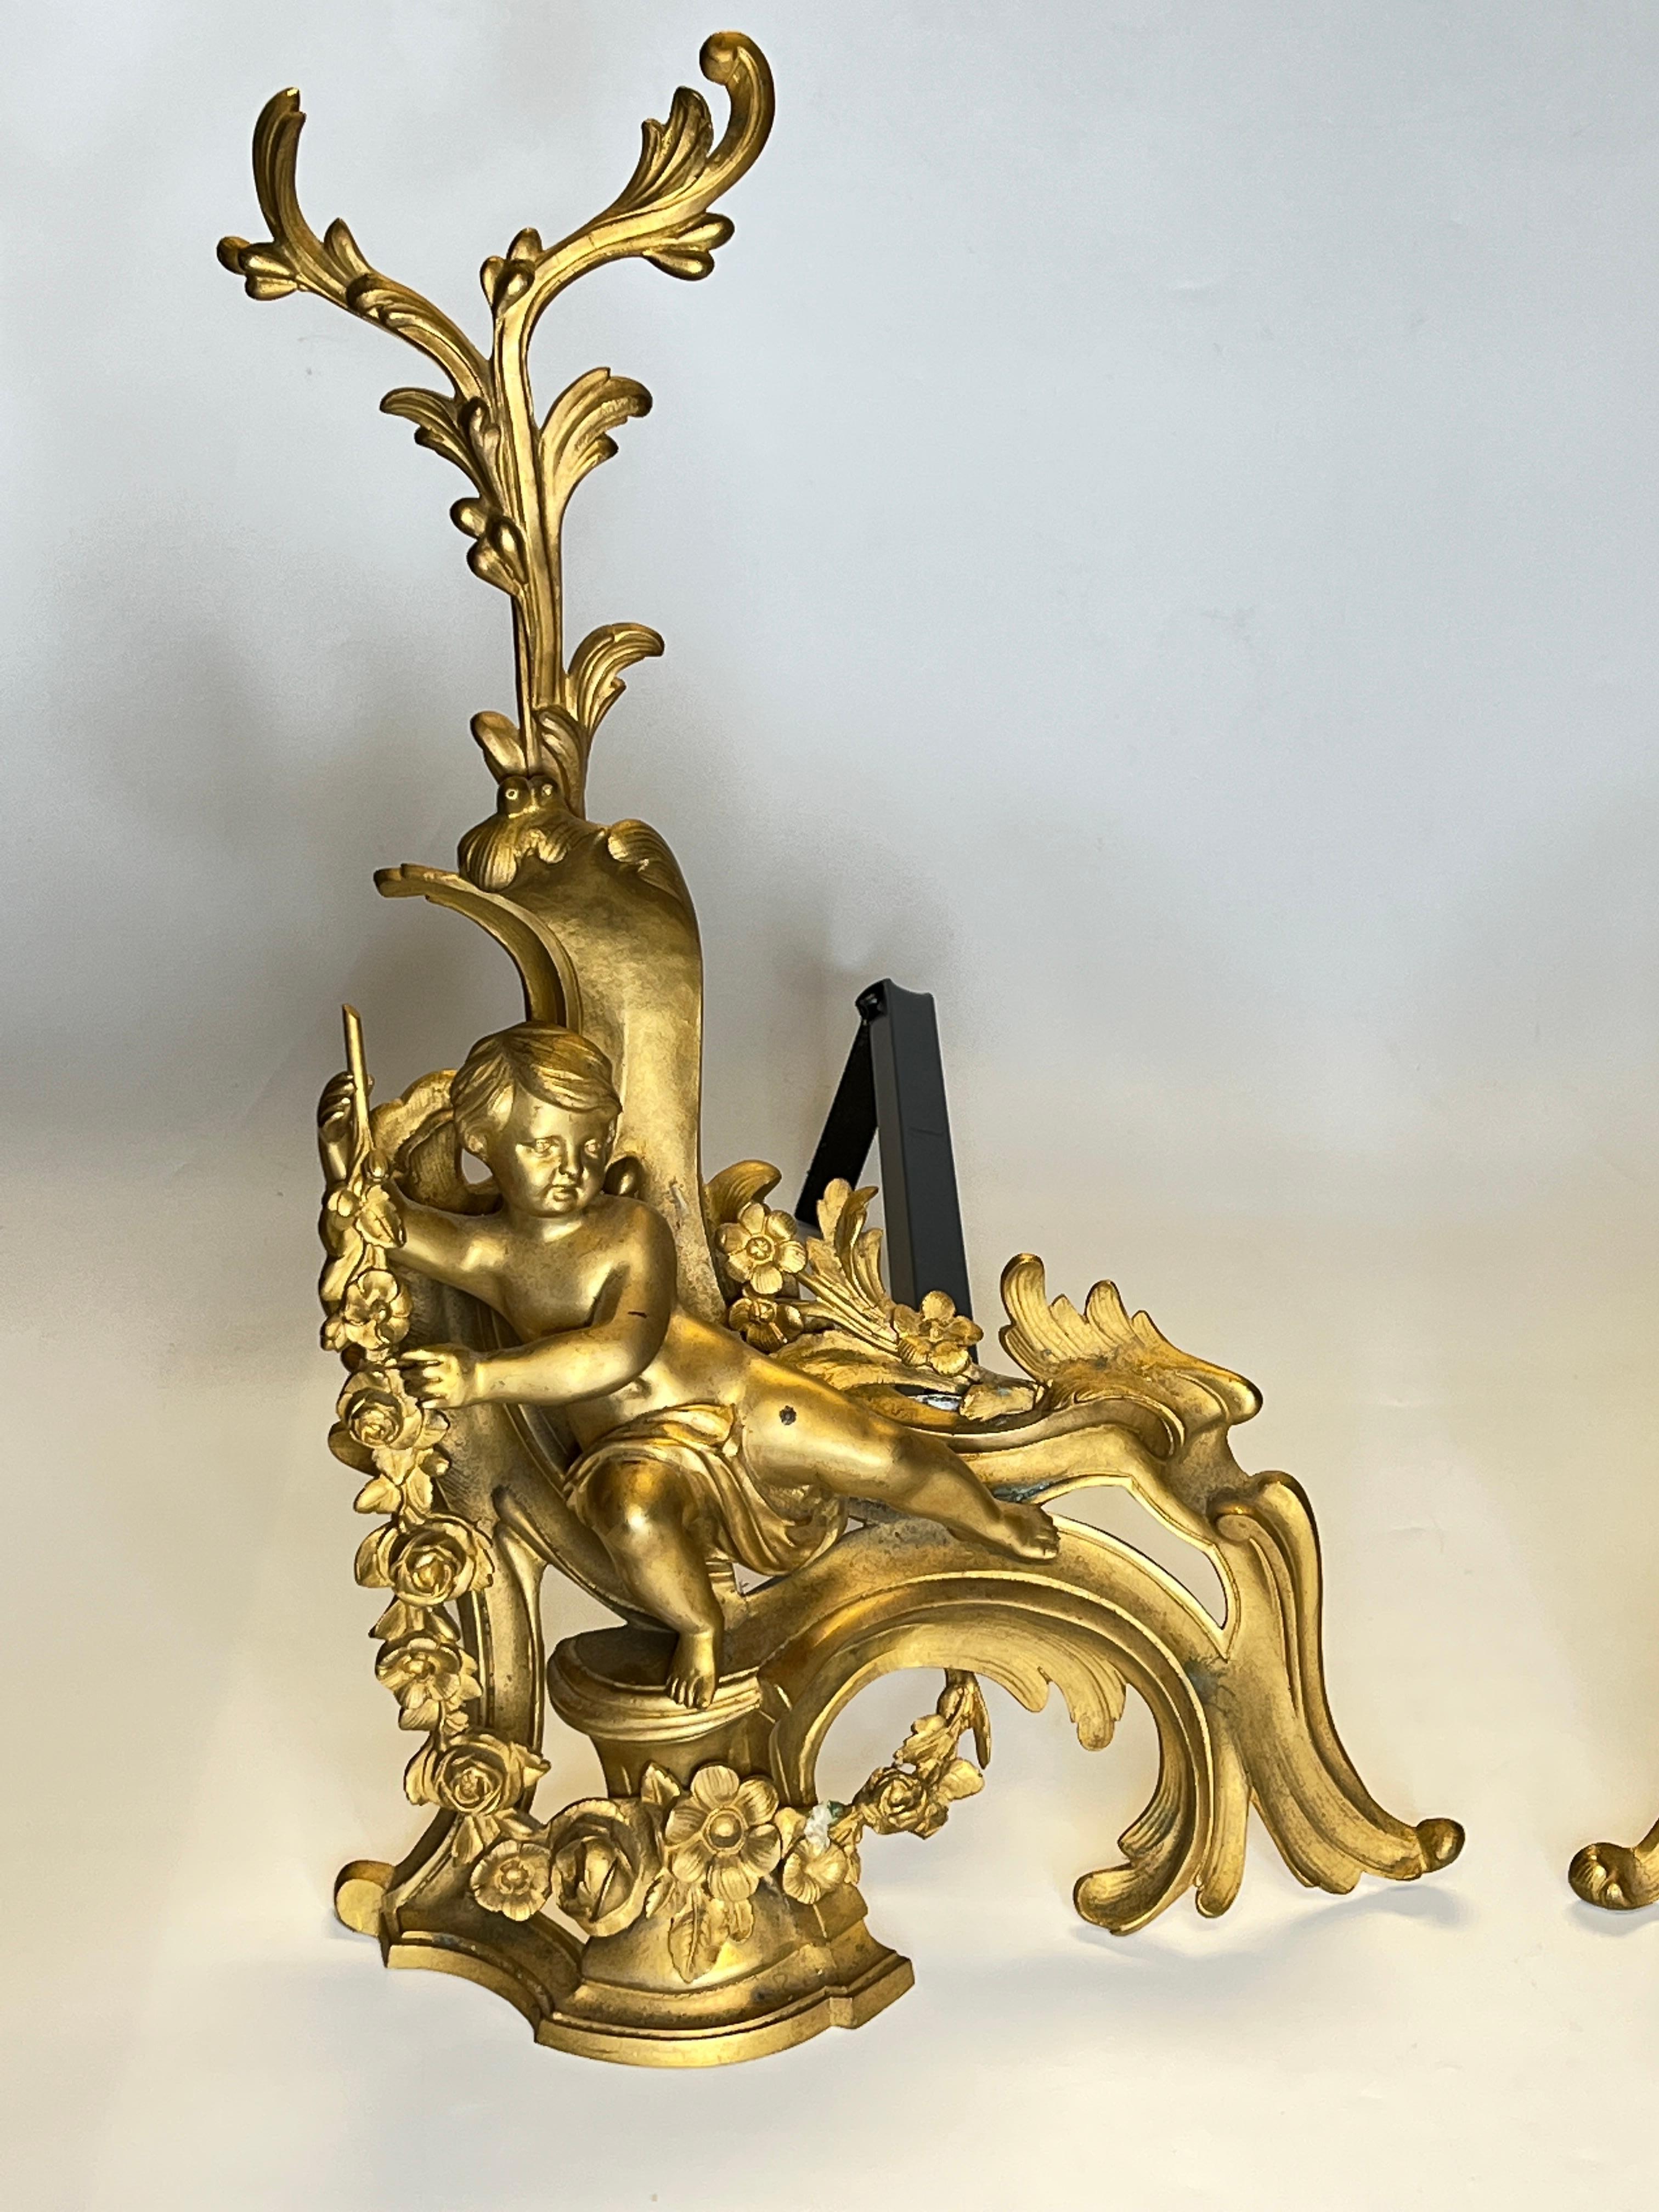 Pair of 19 century French Louis XVI style gilt bronze cherub motif figural andirons / chenets.